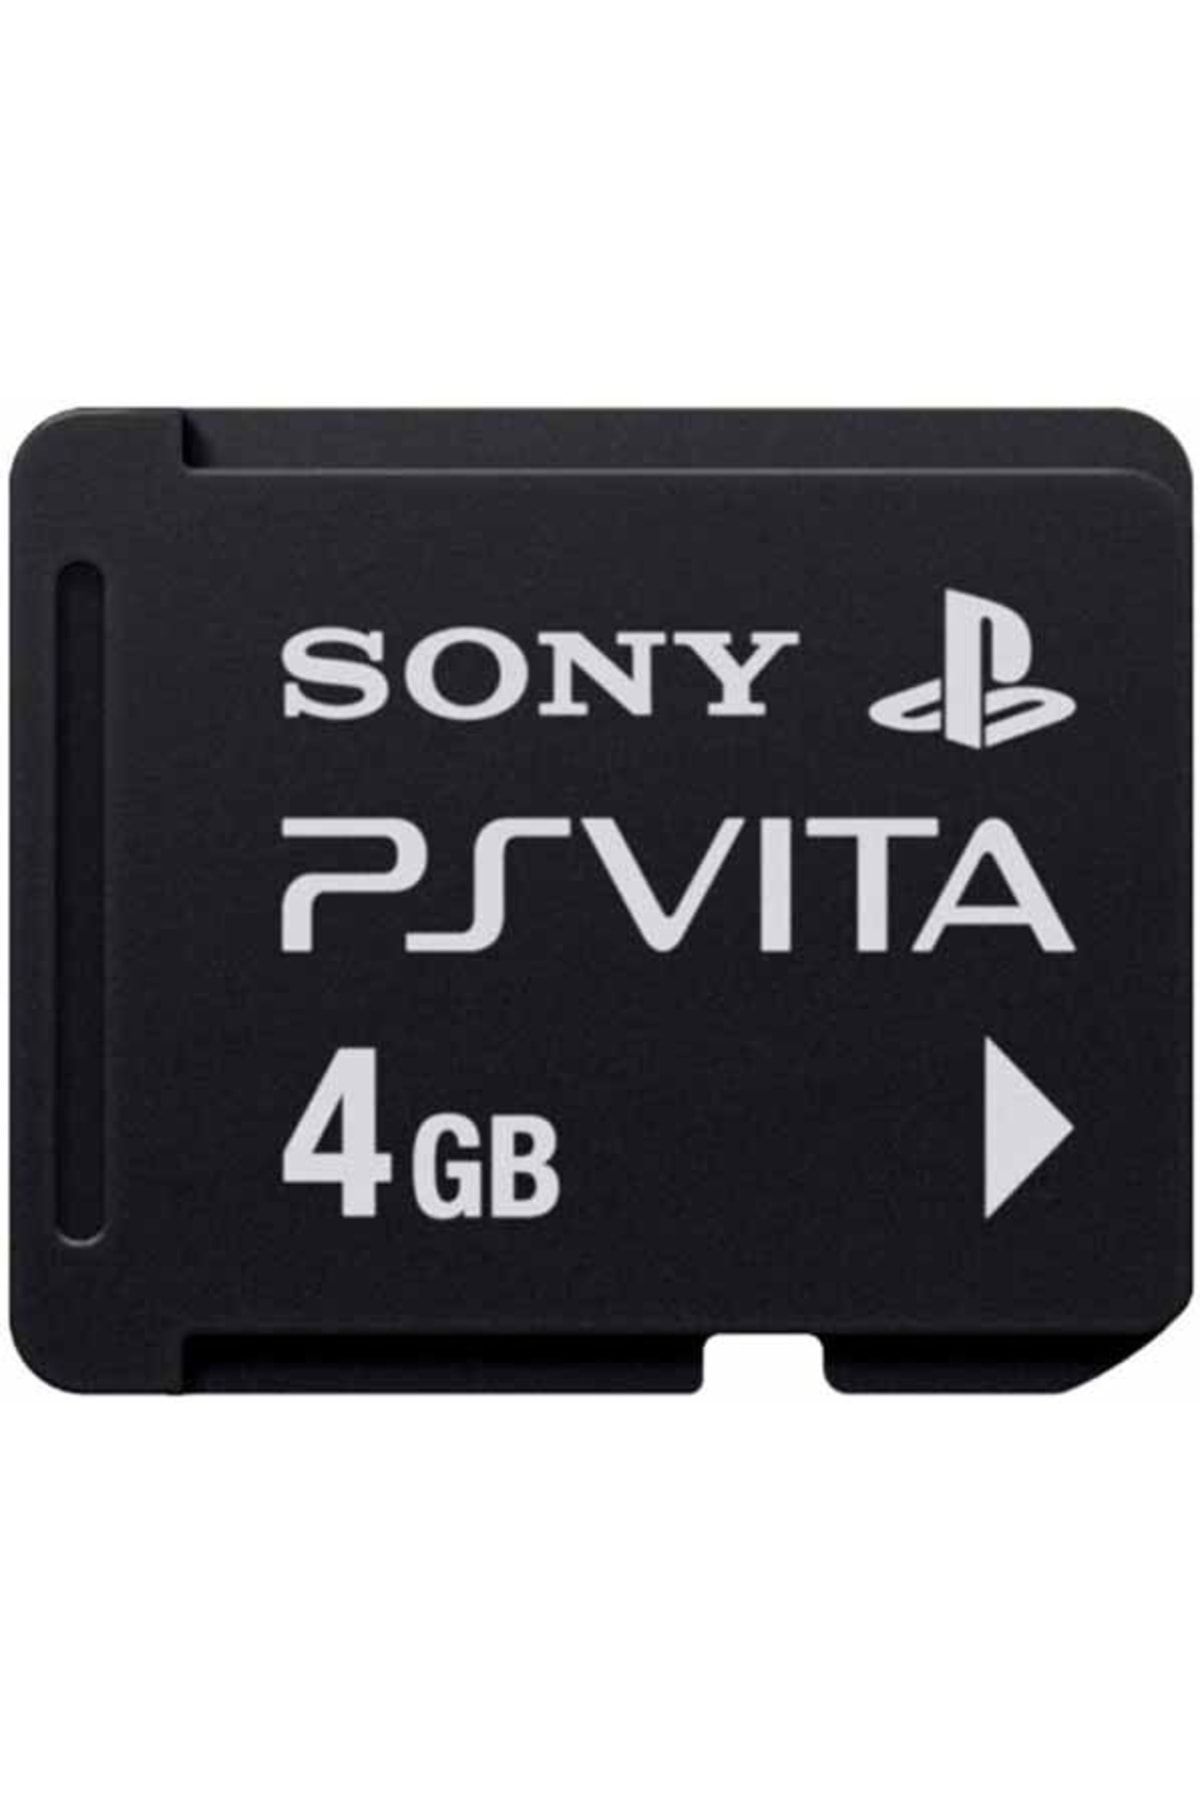 Sony Ps Vita 4gb Hafıza Kartı Psv Memory Card Ps Vita Kart Ps Vita Hafıza Kartı